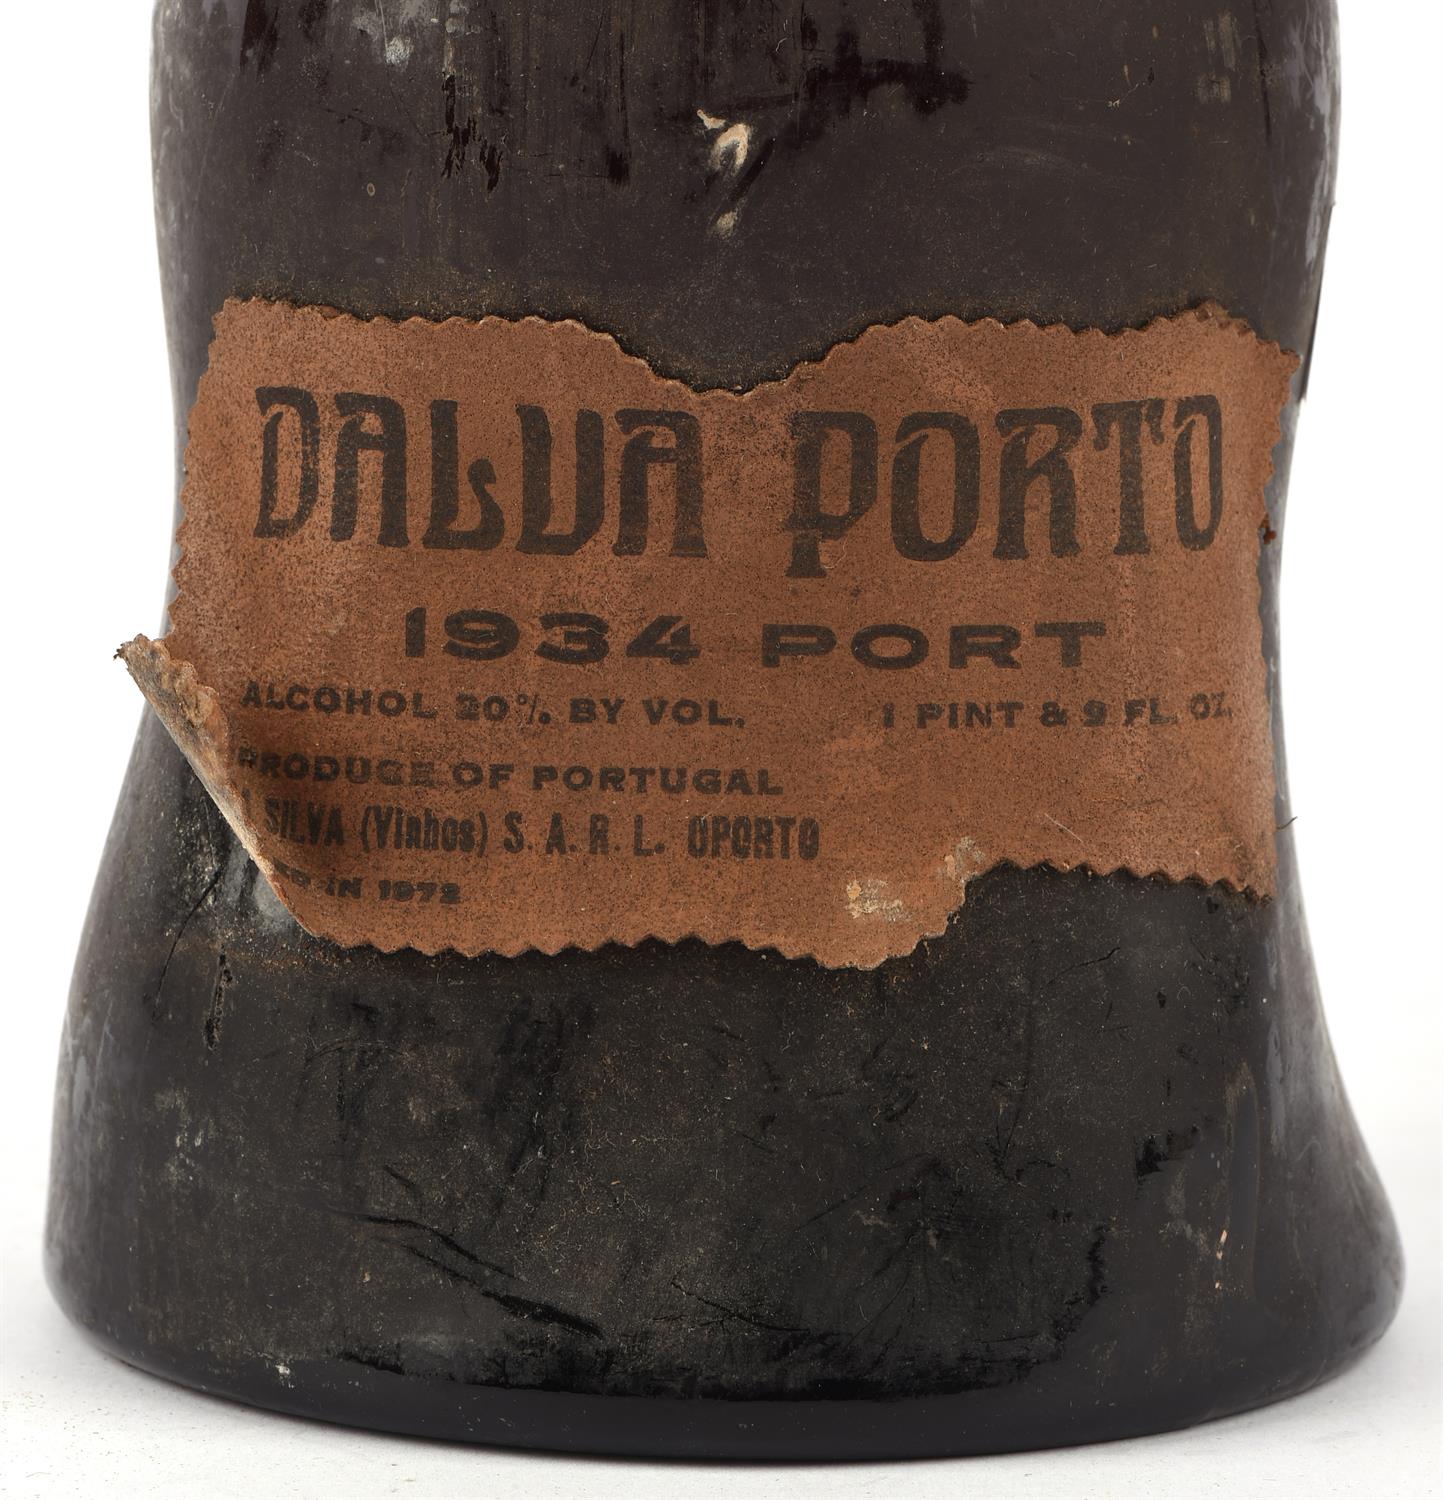 Port, Porto D' Alva 1934, one bottle - Bild 2 aus 4